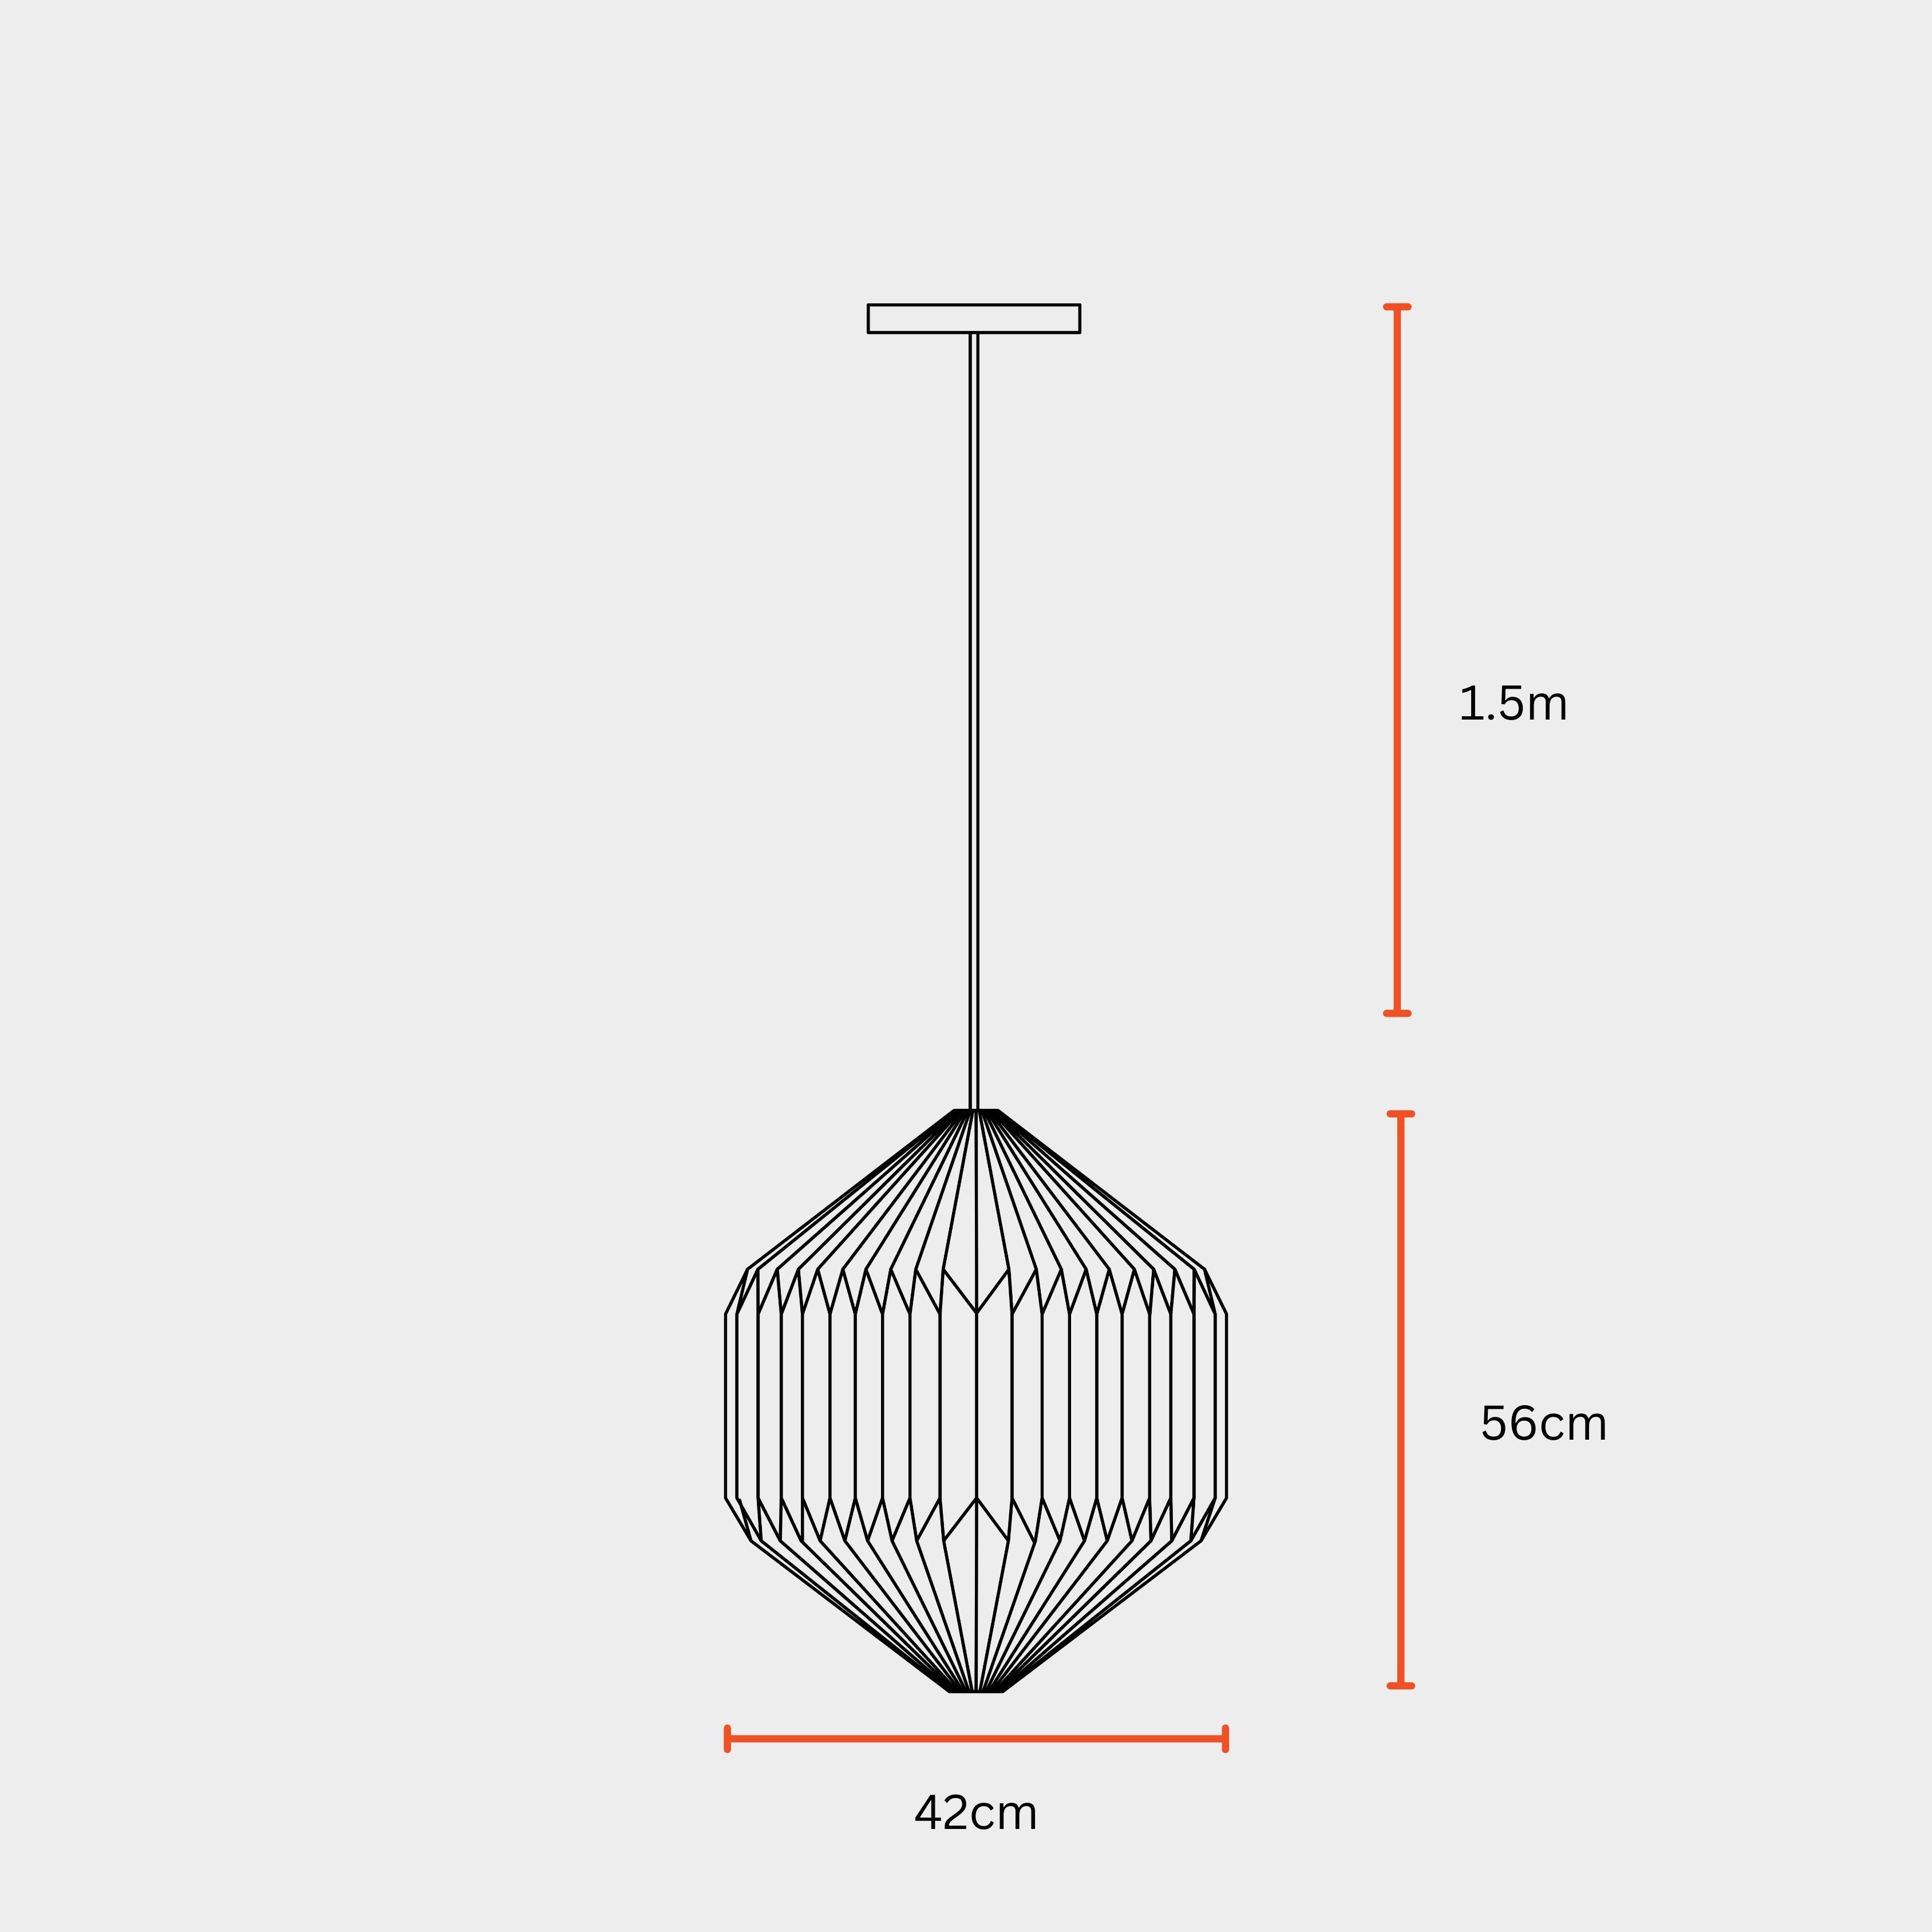 Oblong Pendant Lamp - Paper Origami Pendant Light , Handpleating, Origami Lampshade, Scandinavian Design Hanging Light